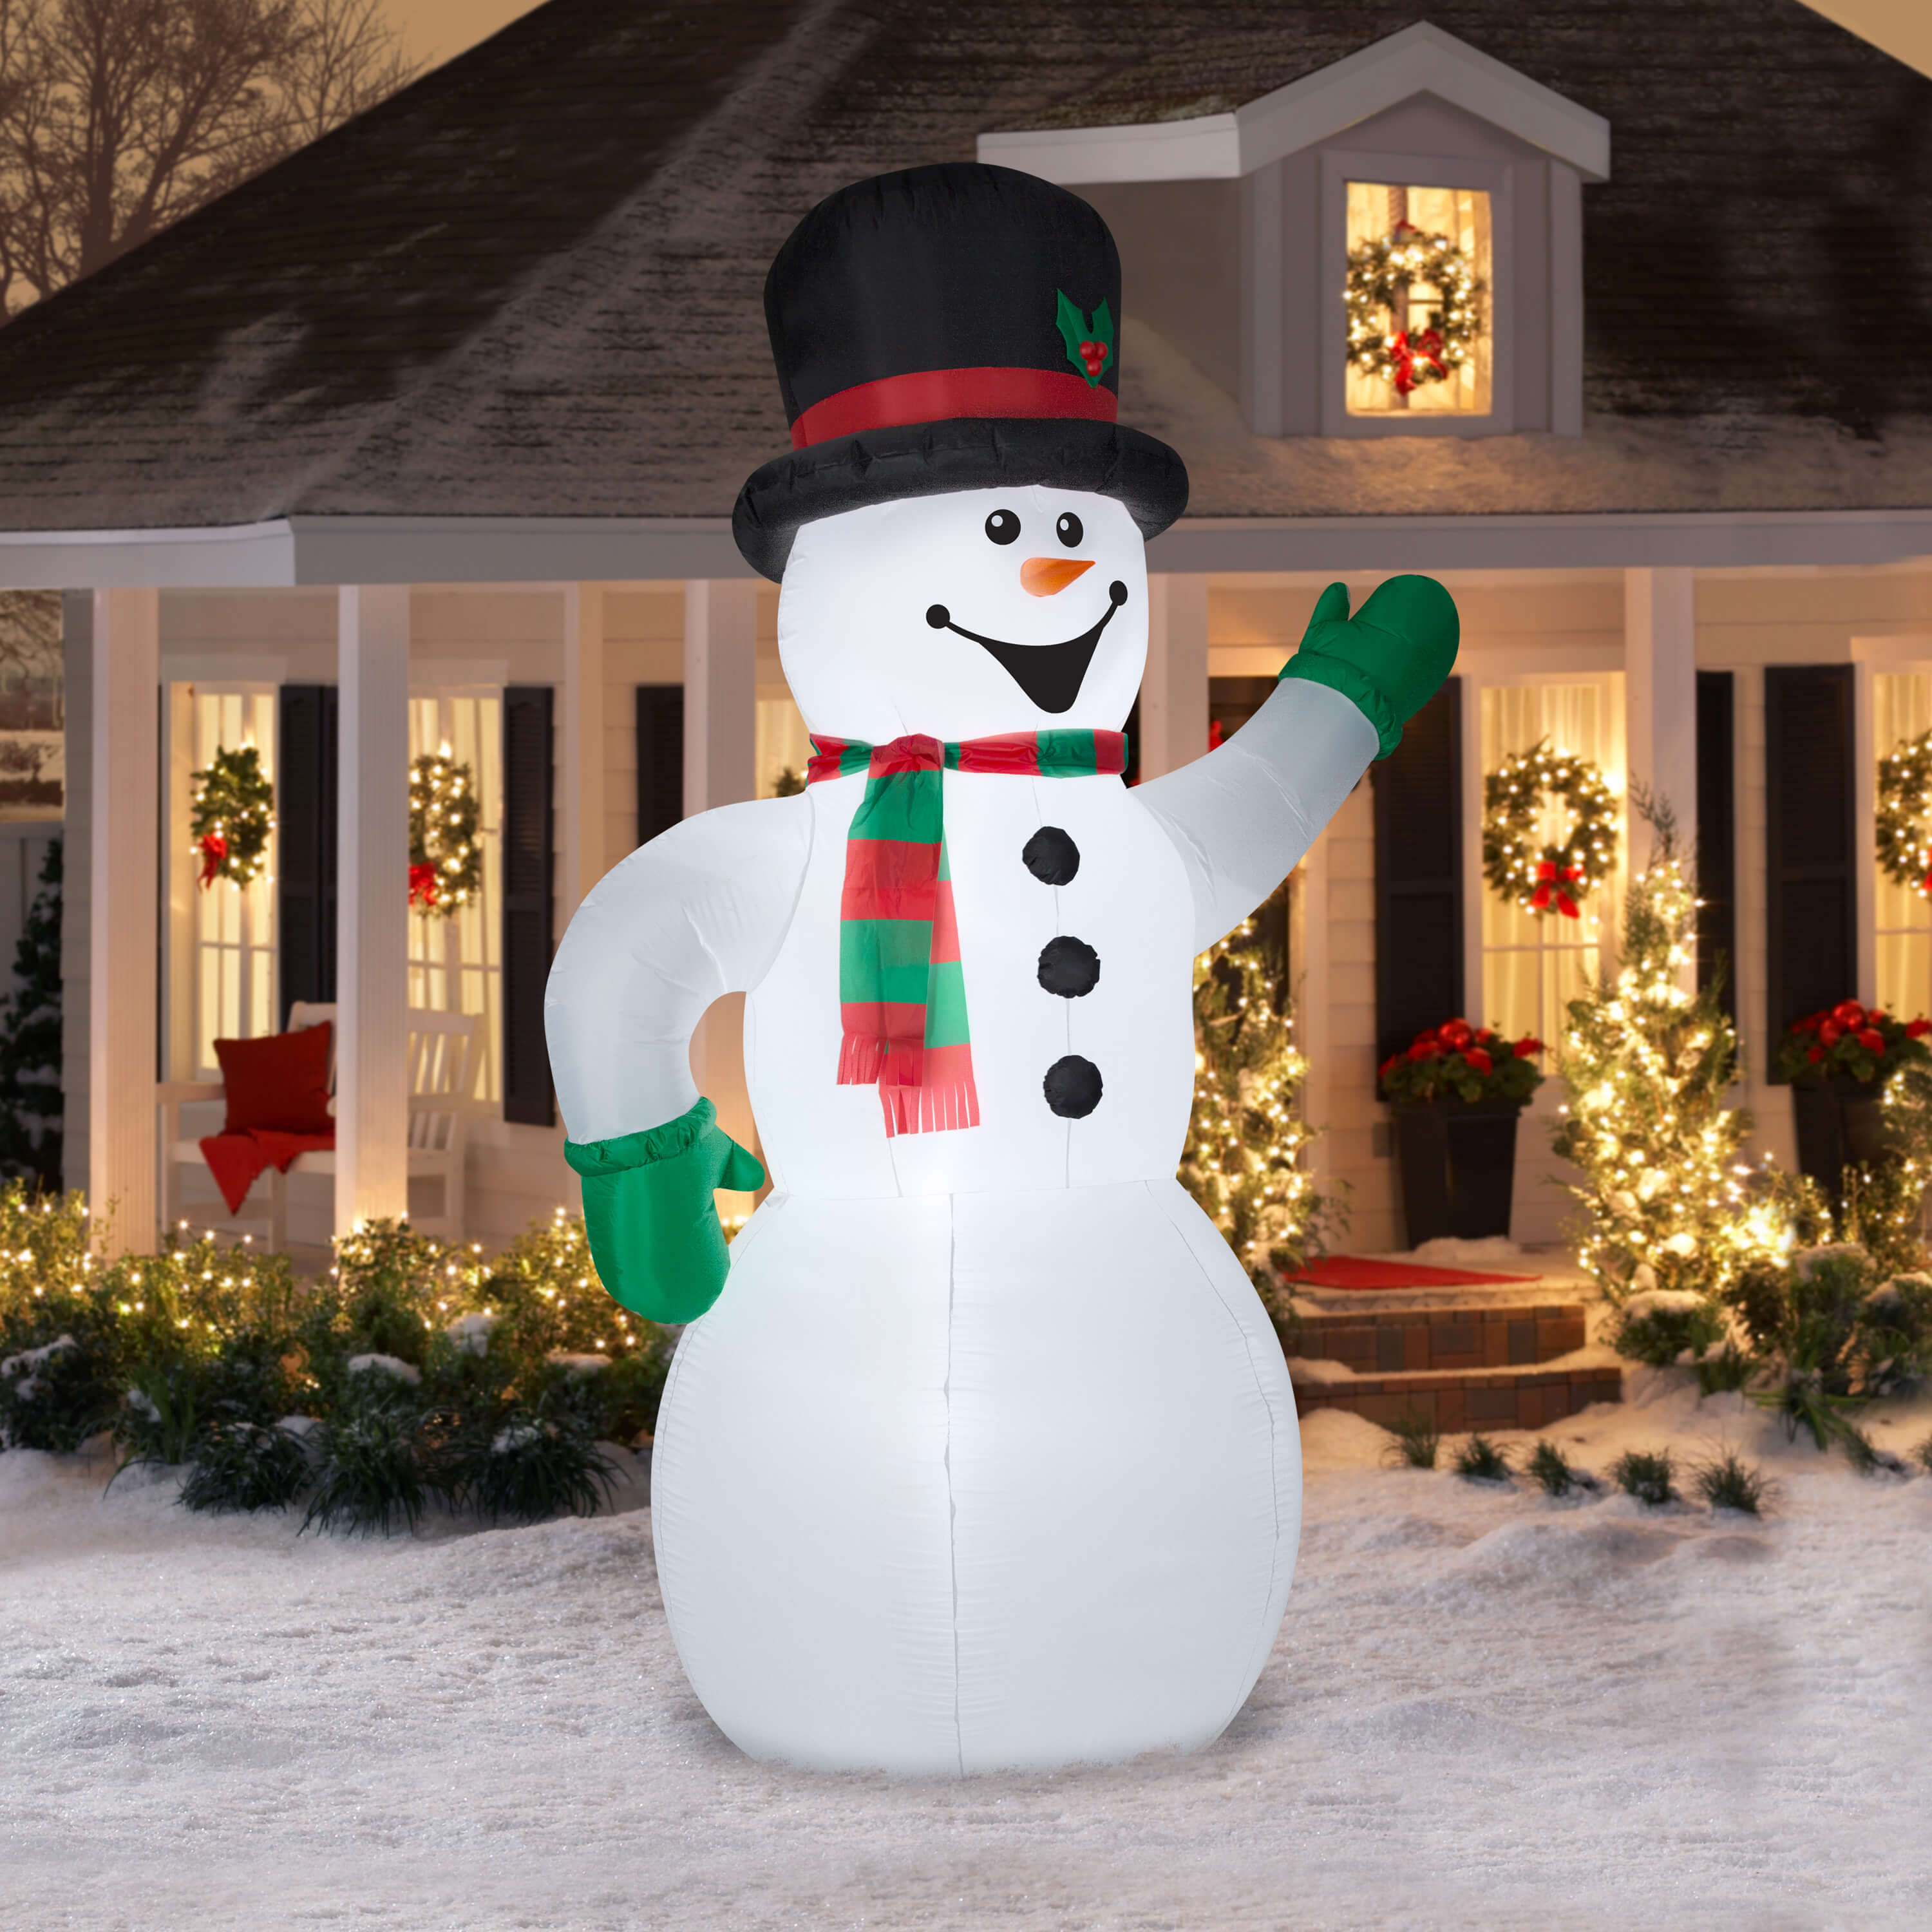 outdoor snowman decorations.